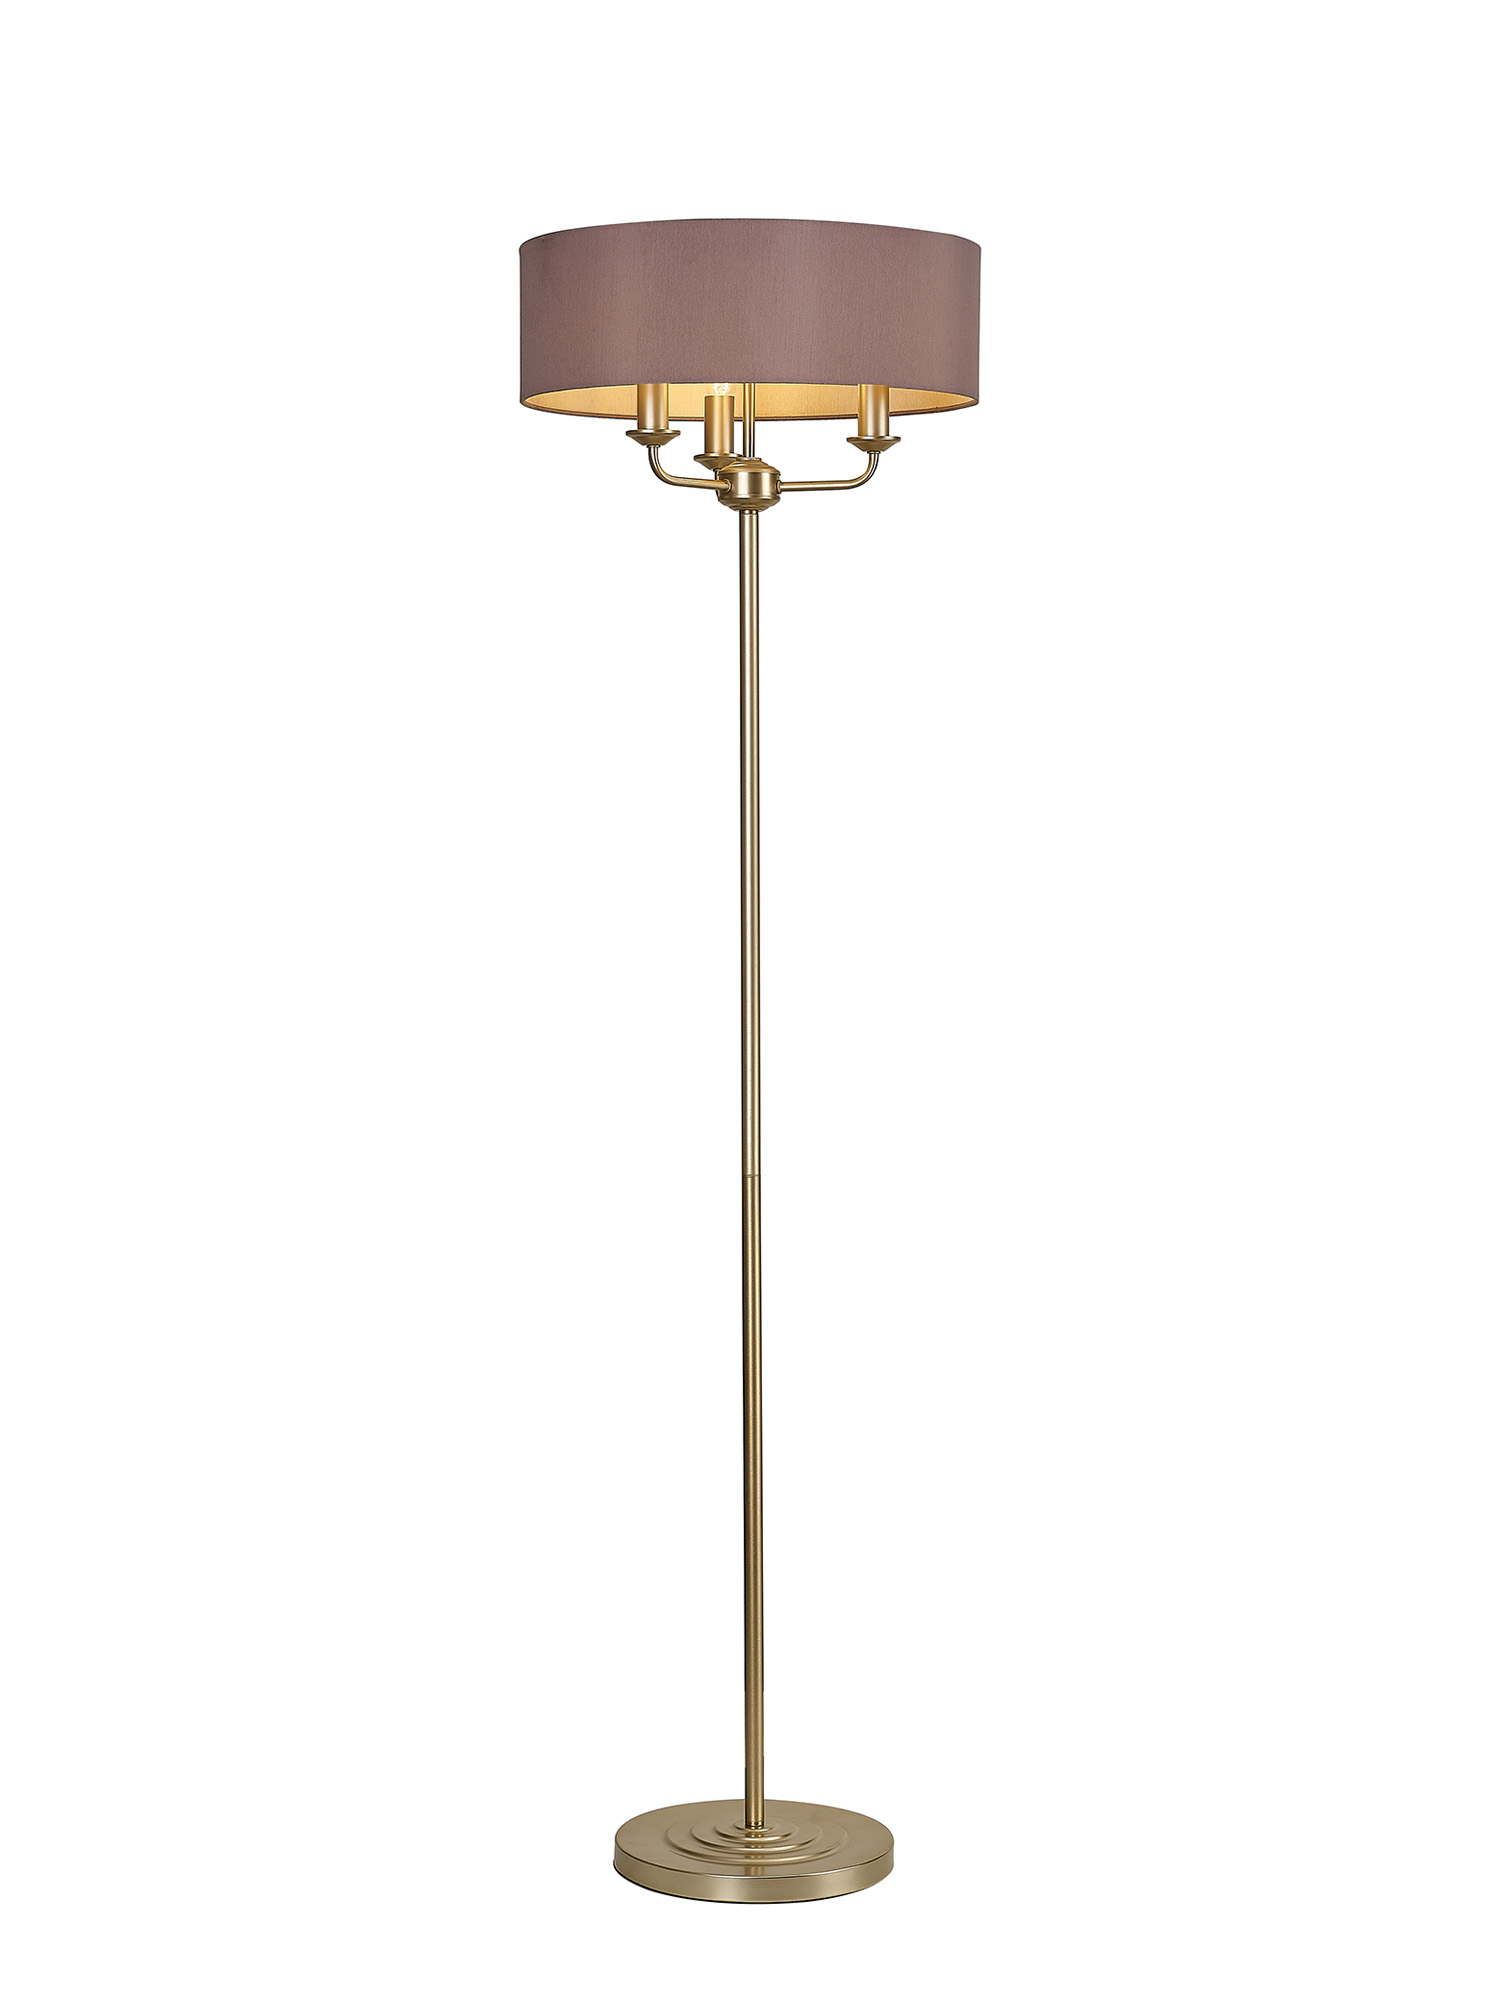 DK0992  Banyan 45cm 3 Light Floor Lamp Champagne Gold, Taupe